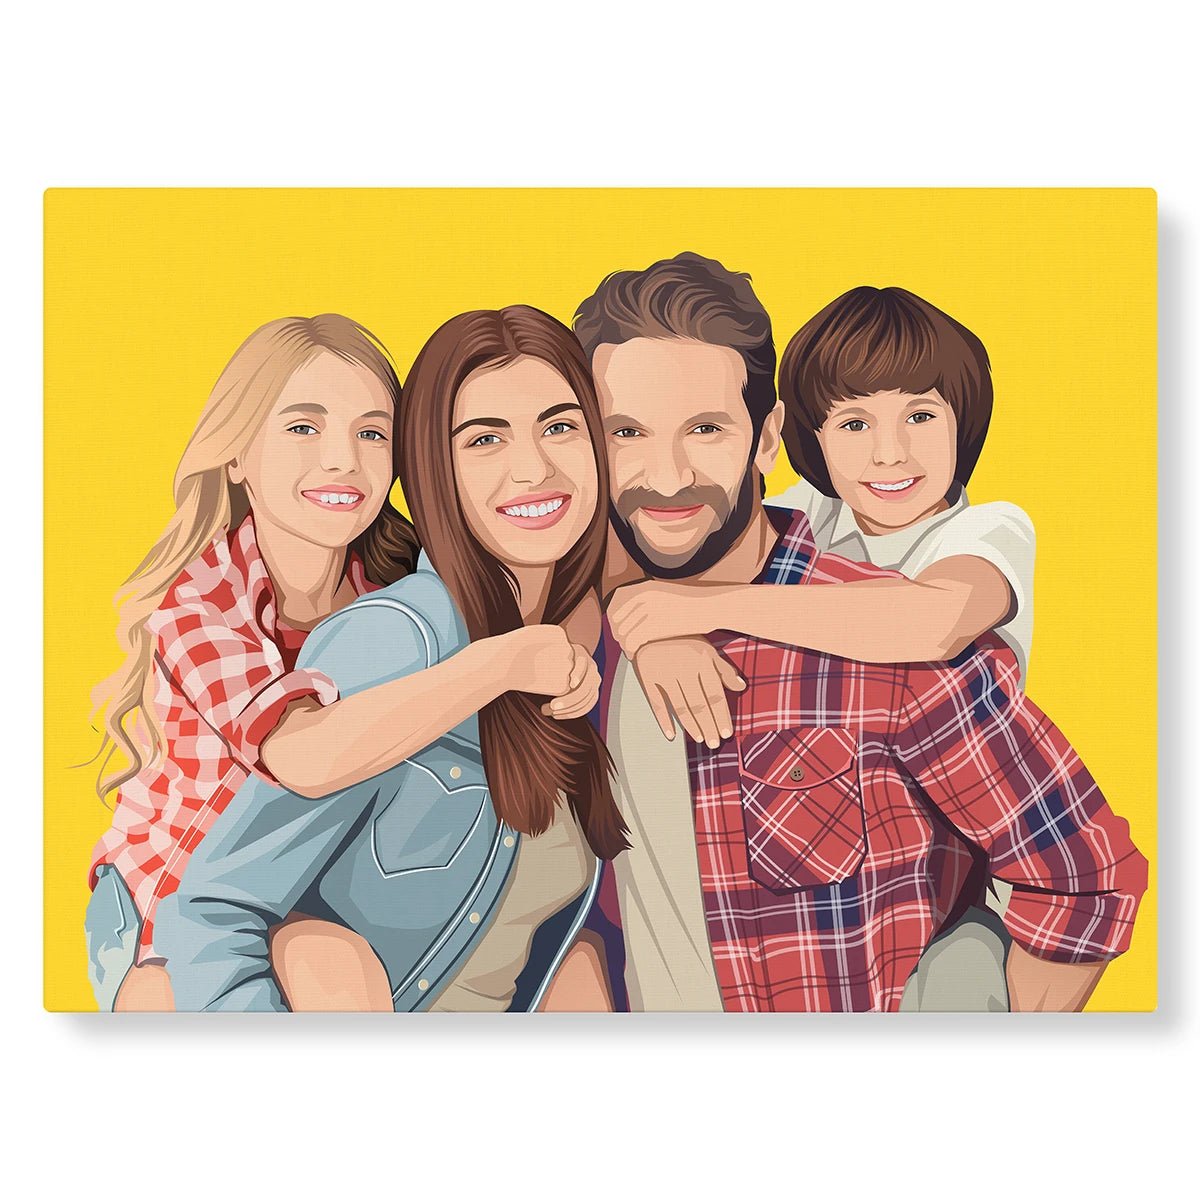 Tableau de famille illustré : PicsArt jaune - Studio Pop Art